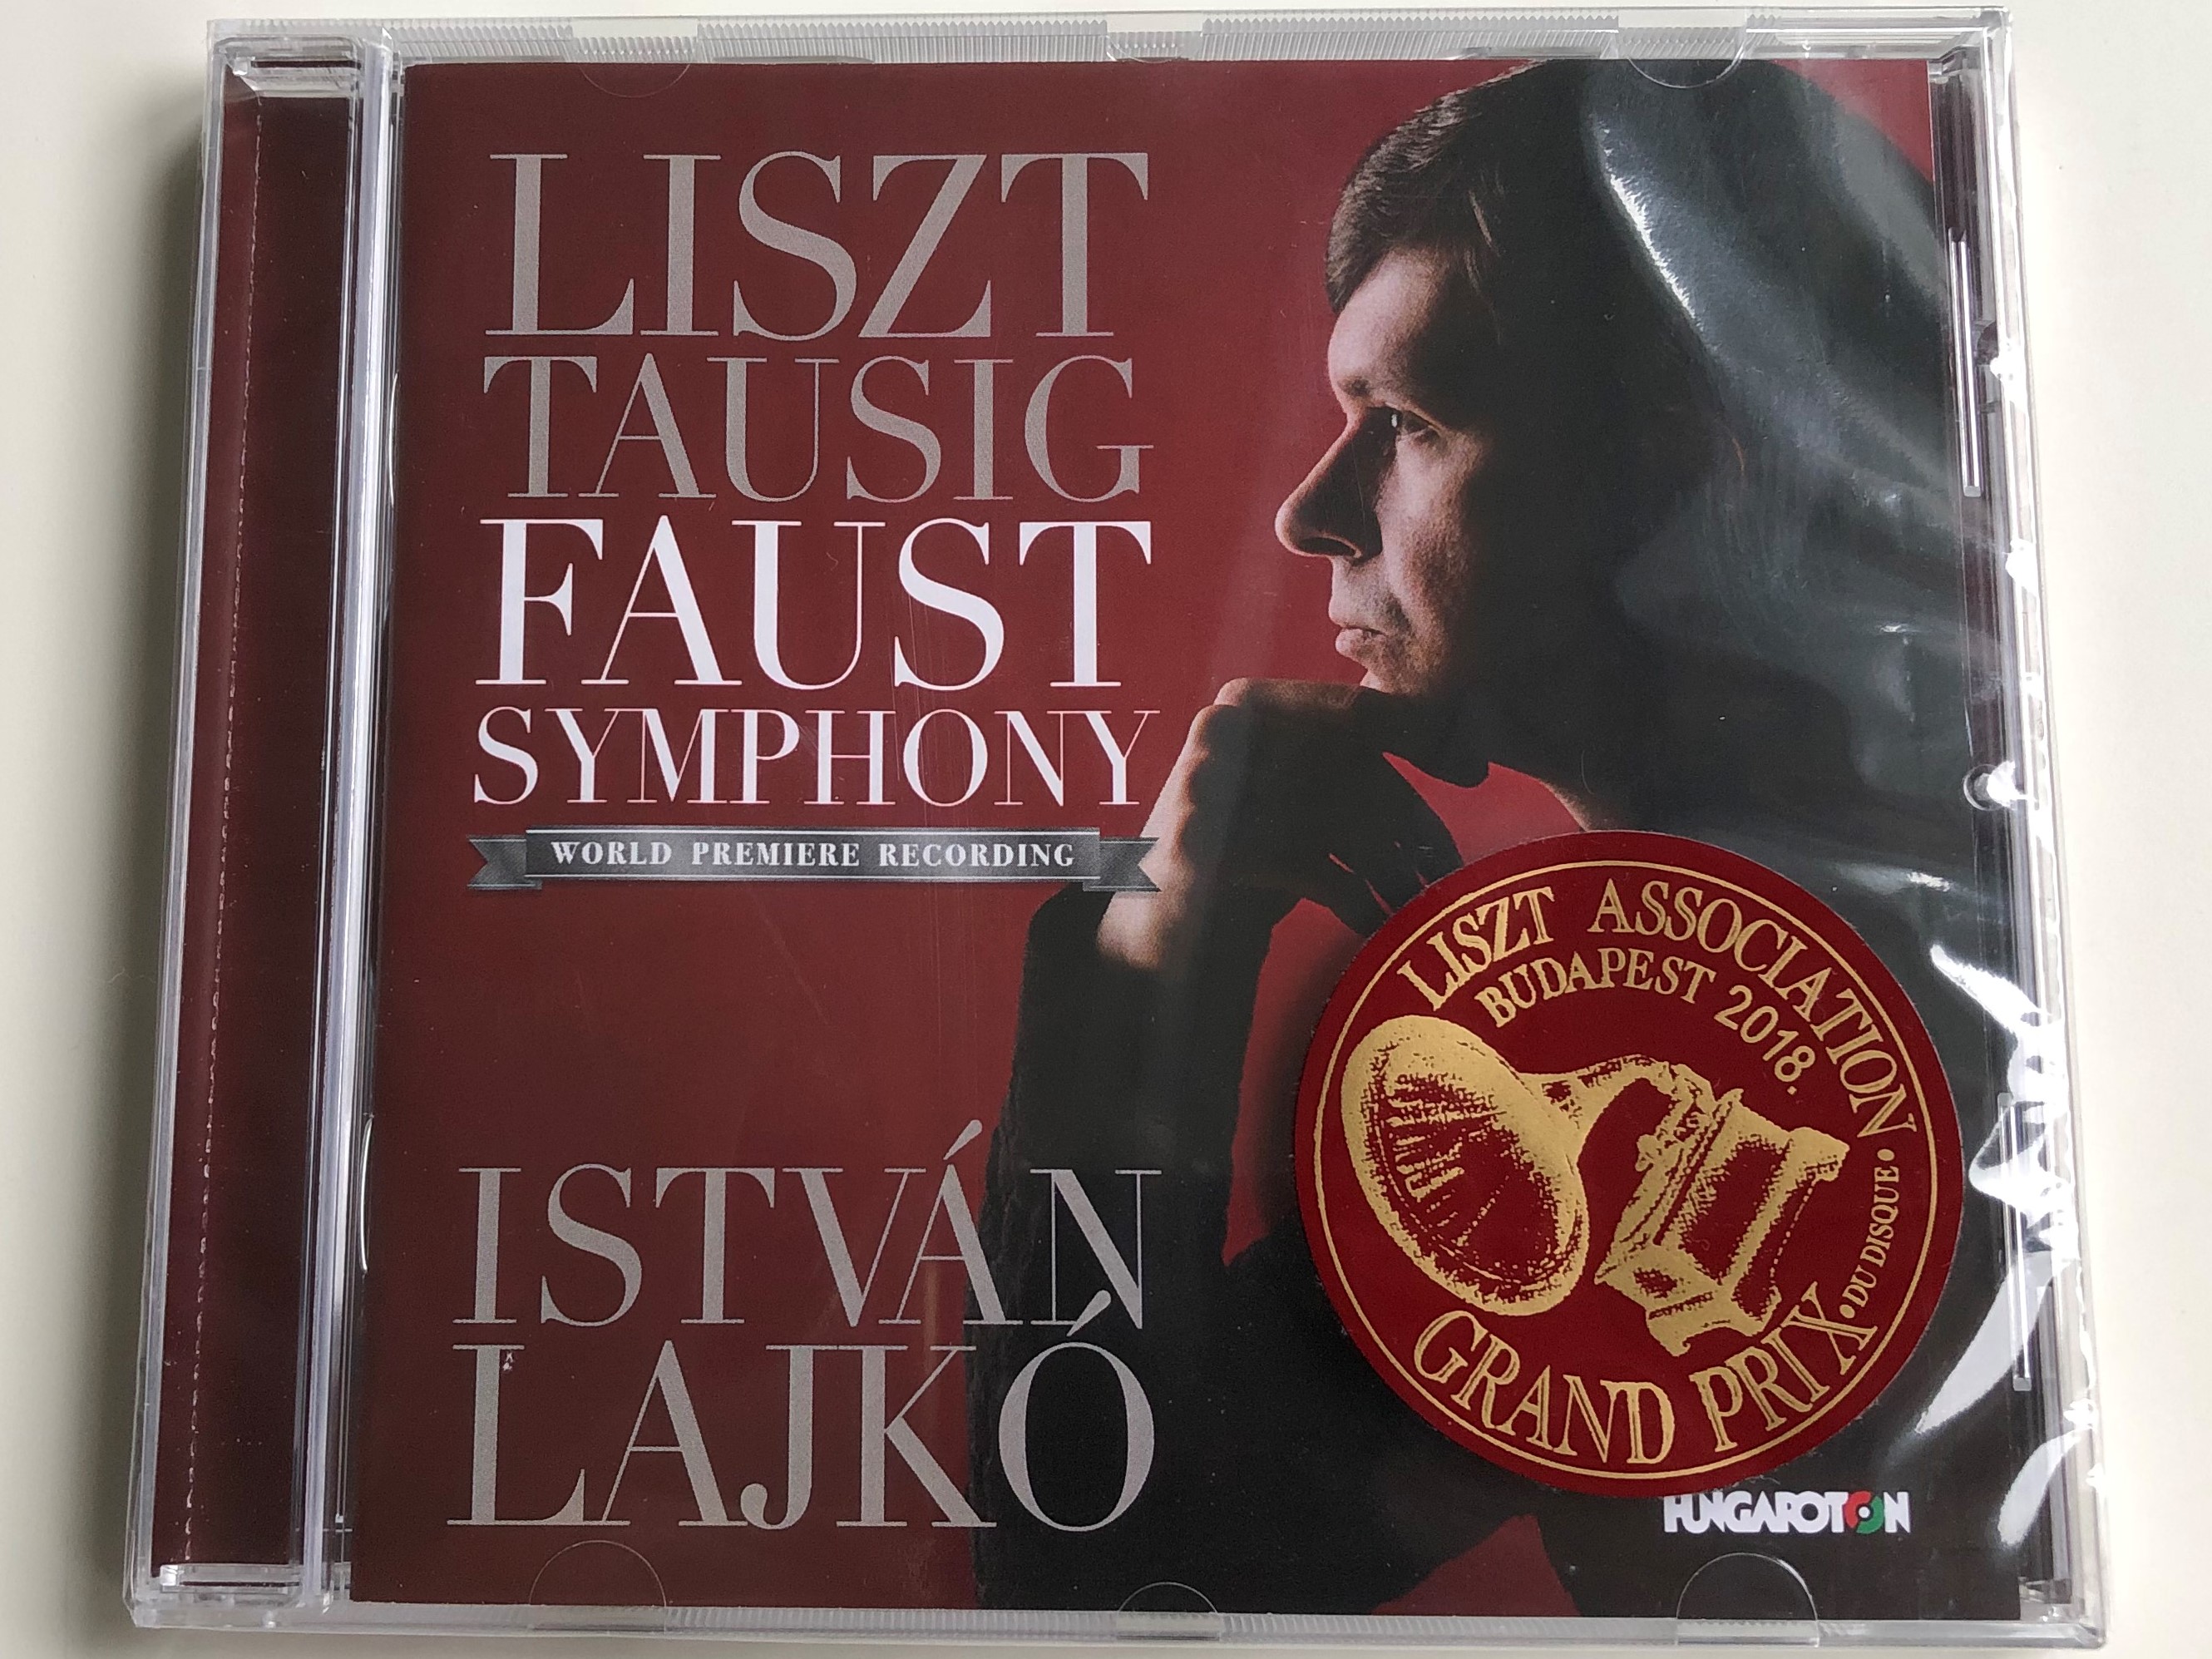 liszt-tausig-faust-symphony-world-premiere-recording-istvan-lajko-hungaroton-audio-cd-2016-hcd-32792-1-.jpg